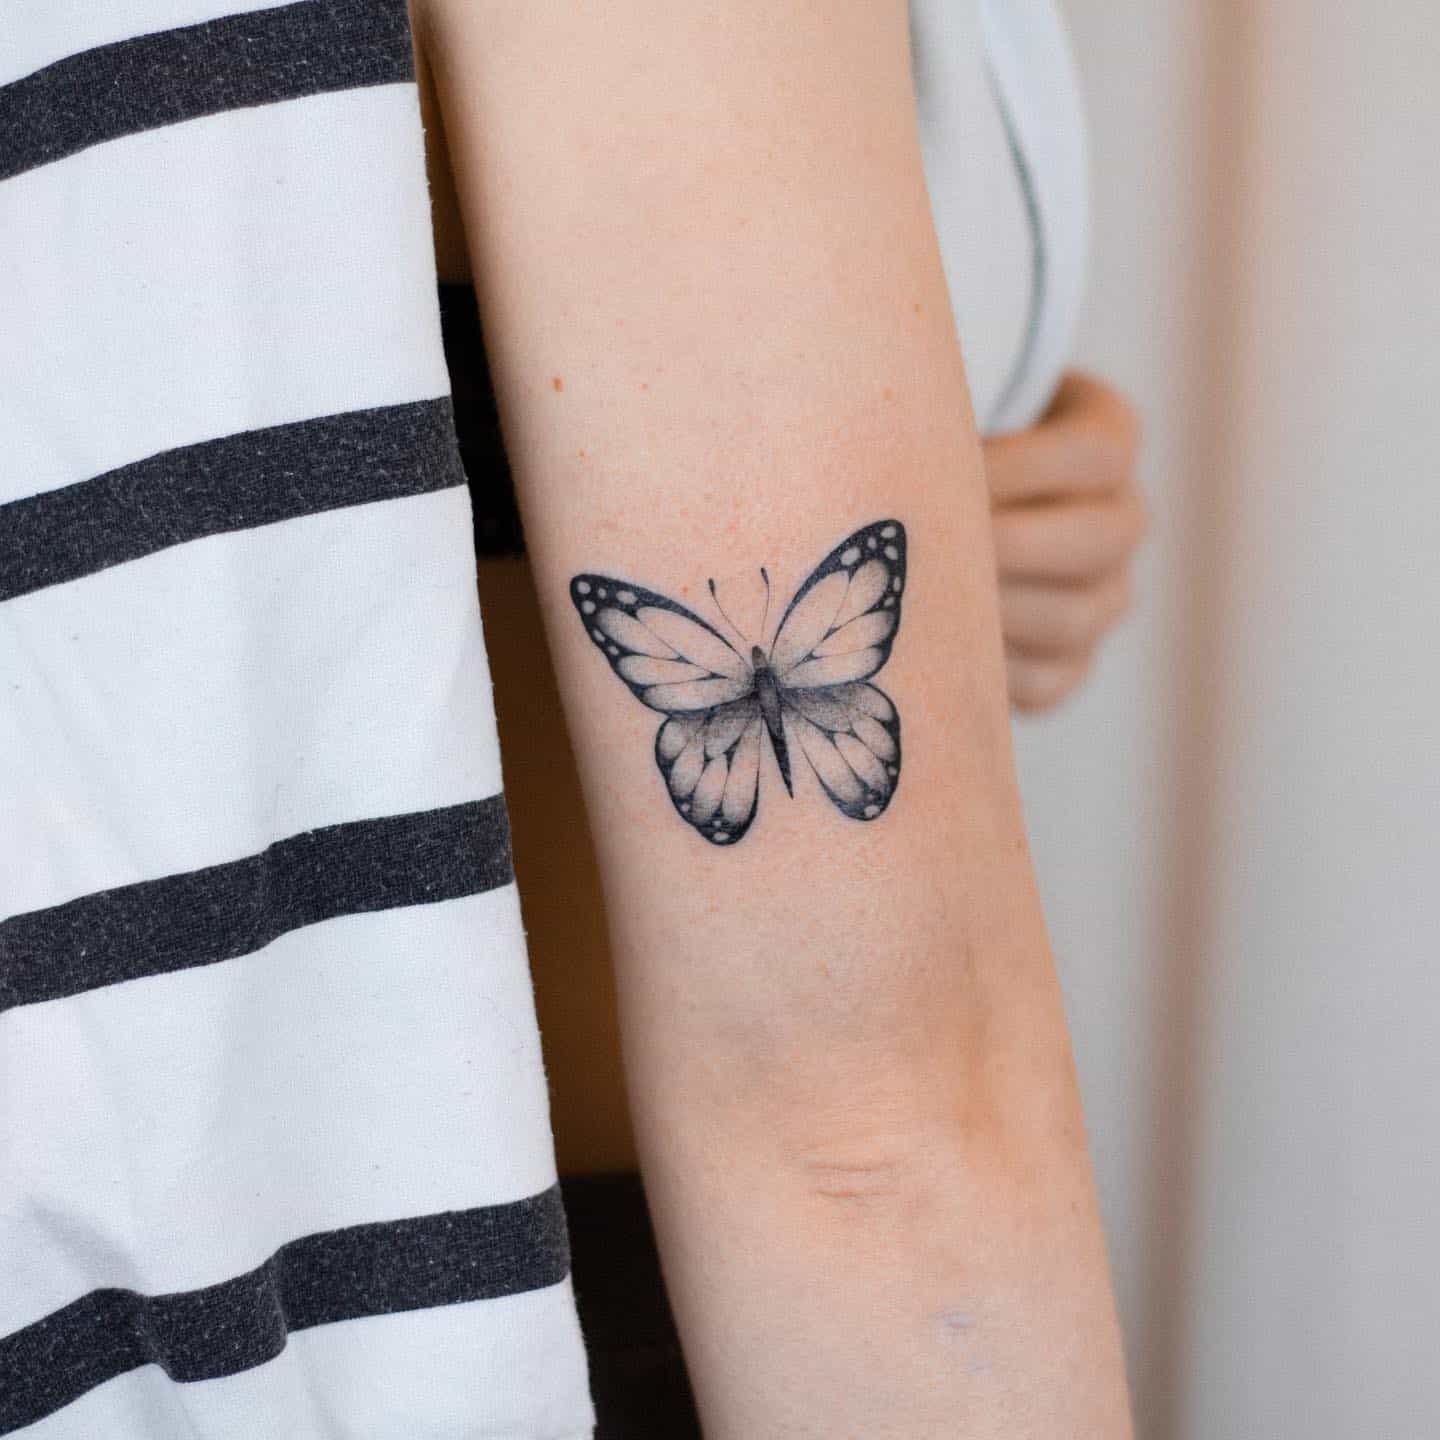 BUtterfly tattoo by botanink ko